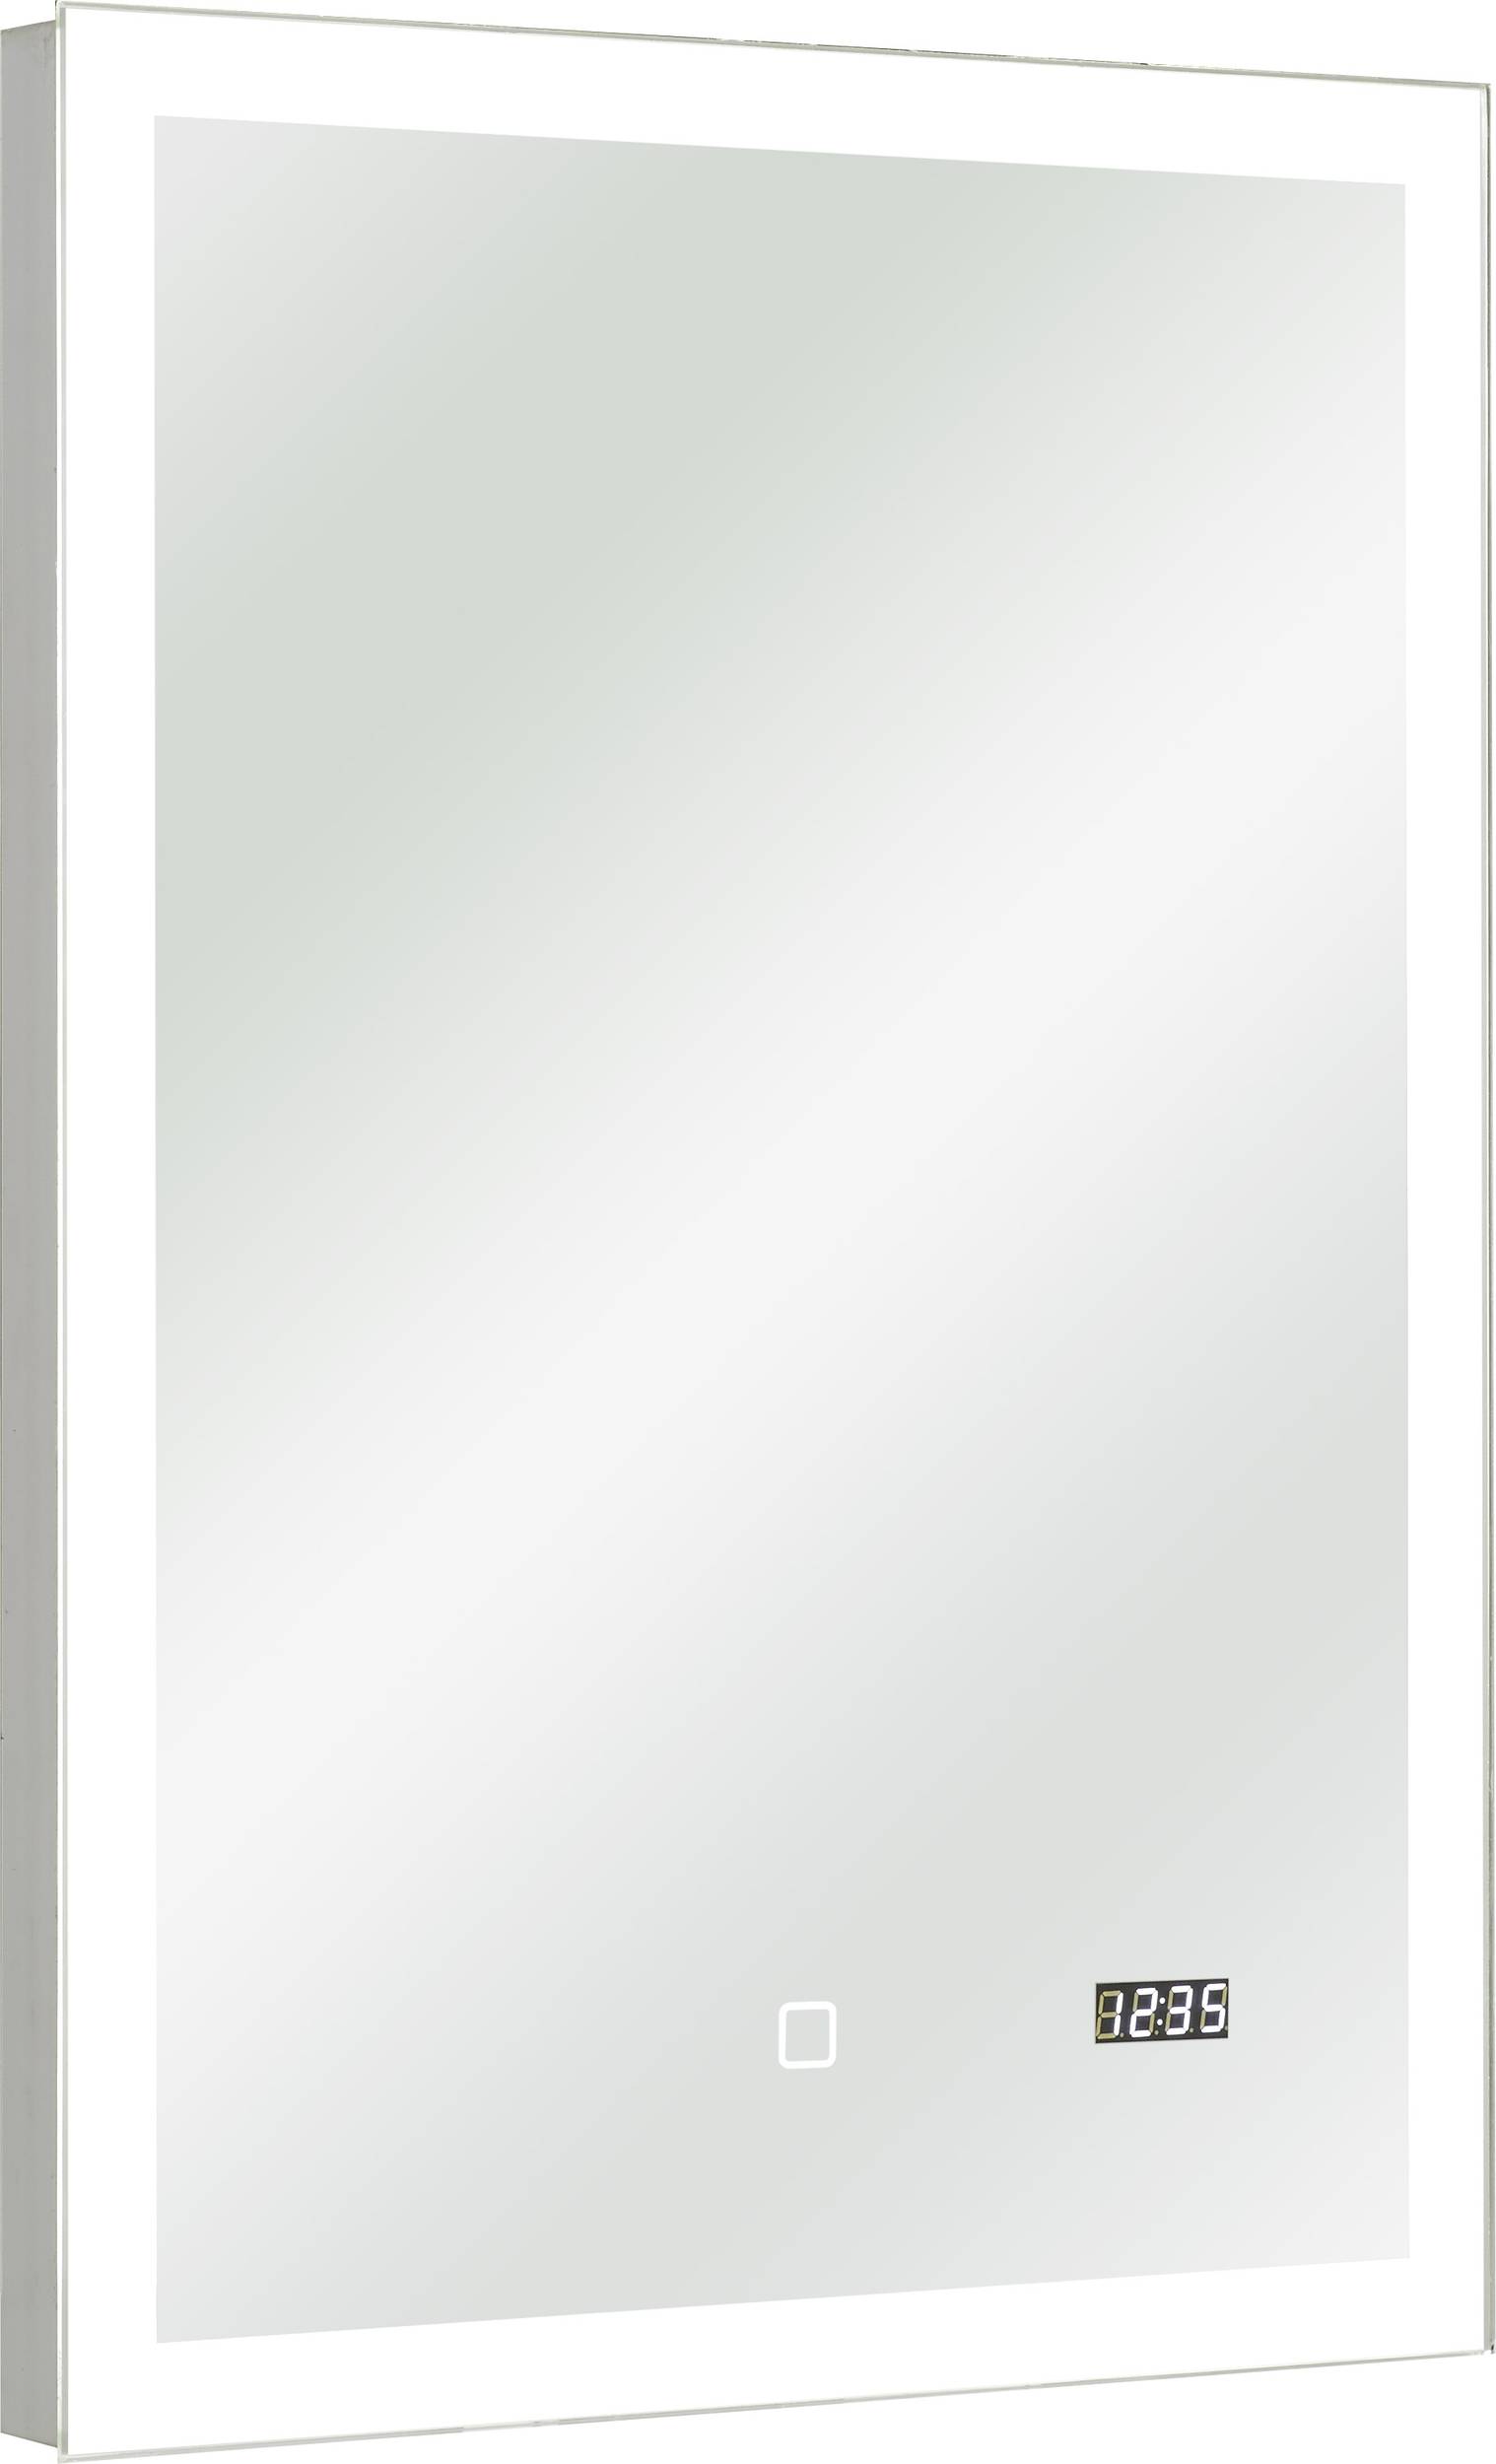 Rudyard Kipling Maori opener Spiegel mit LED + Uhr 50x70 GUNAR